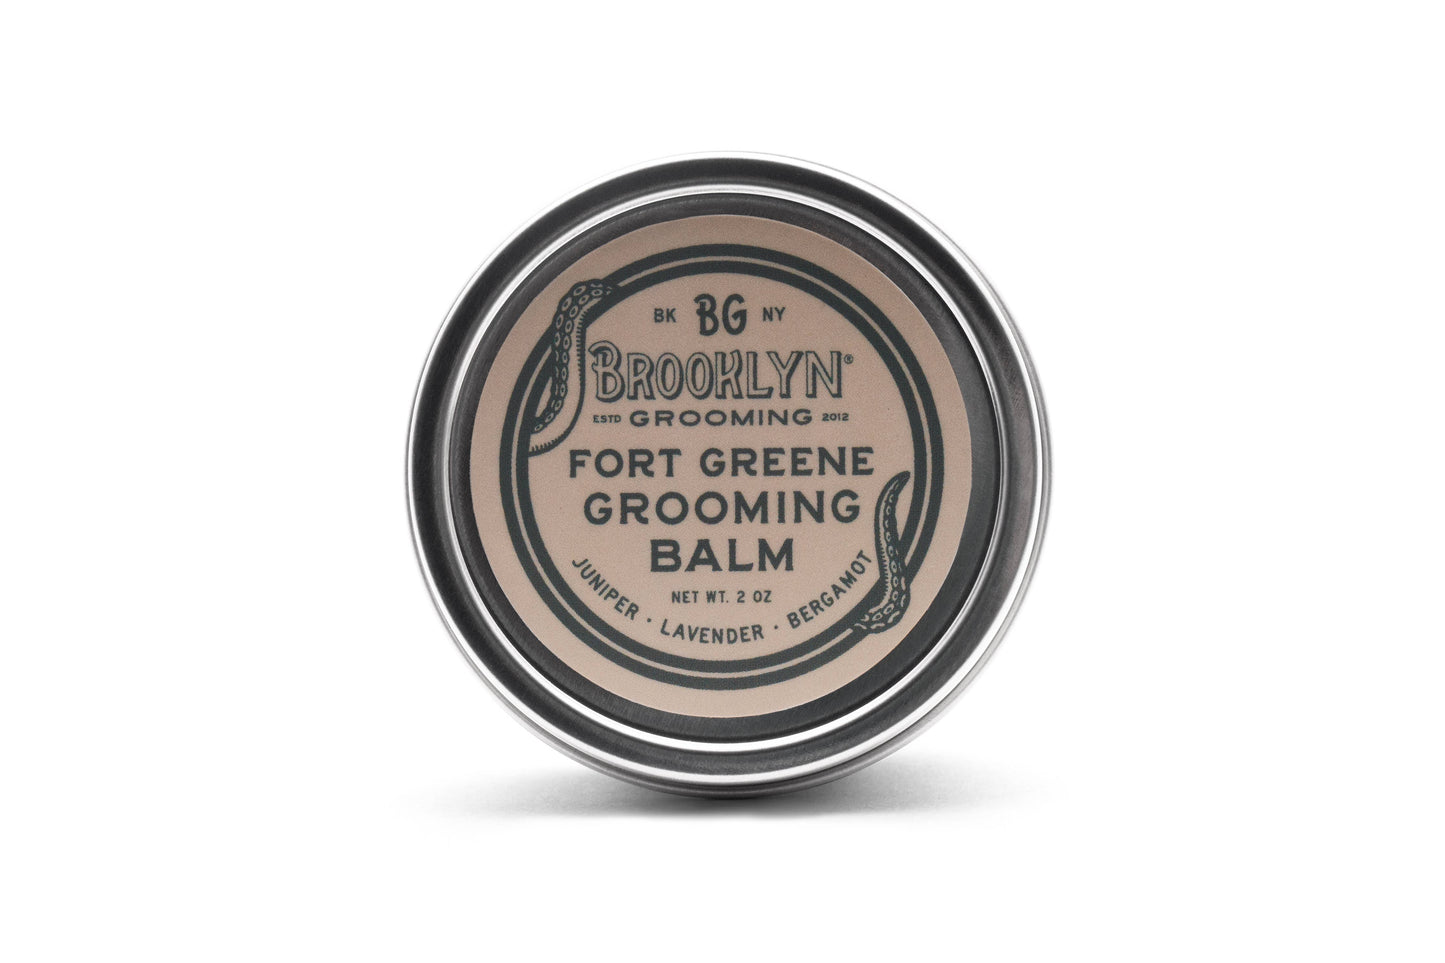 2 oz Fort Greene Grooming Balm